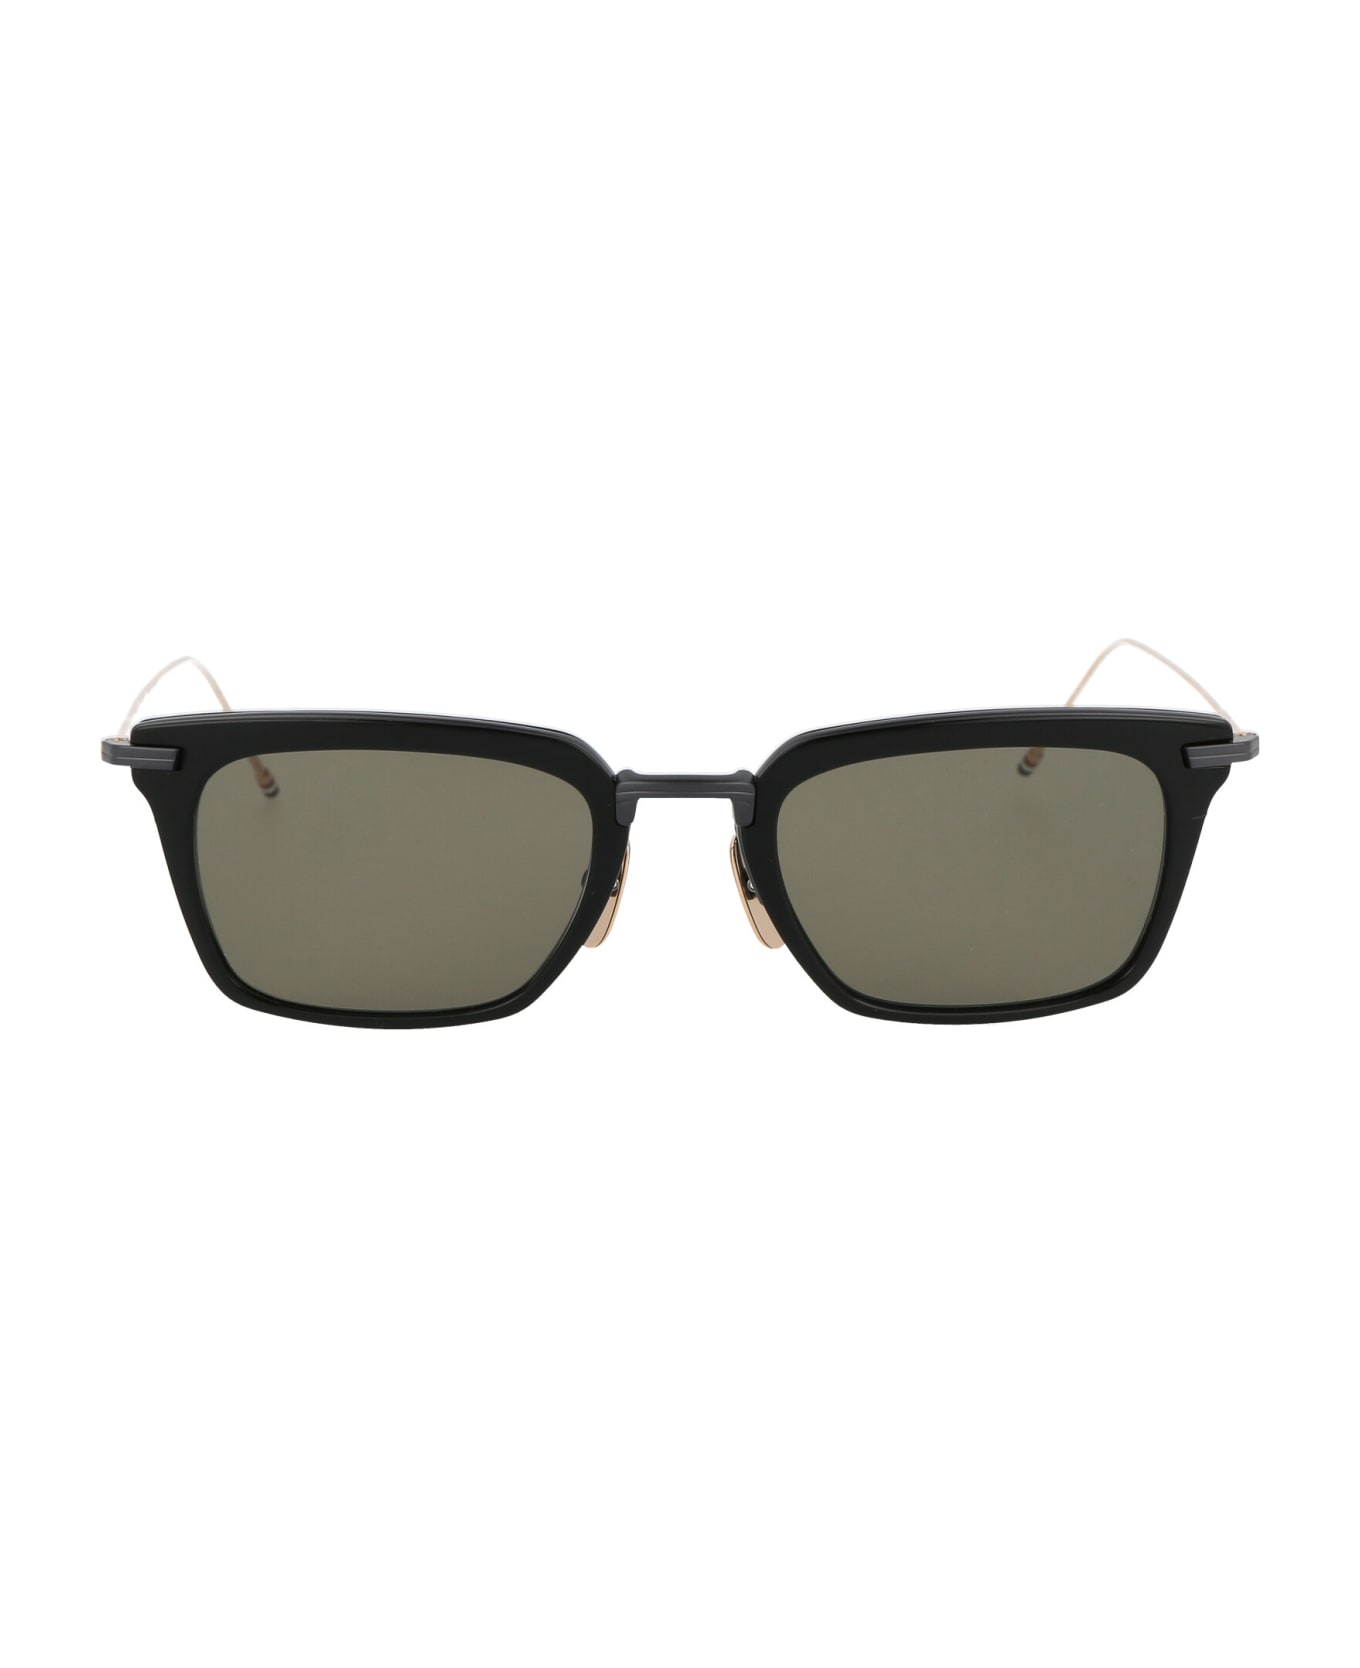 Thom Browne Tb-916 Sunglasses - 01 BLACK - BLACK IRON - WHITE GOLD TEMPLES W/ G-15 サングラス